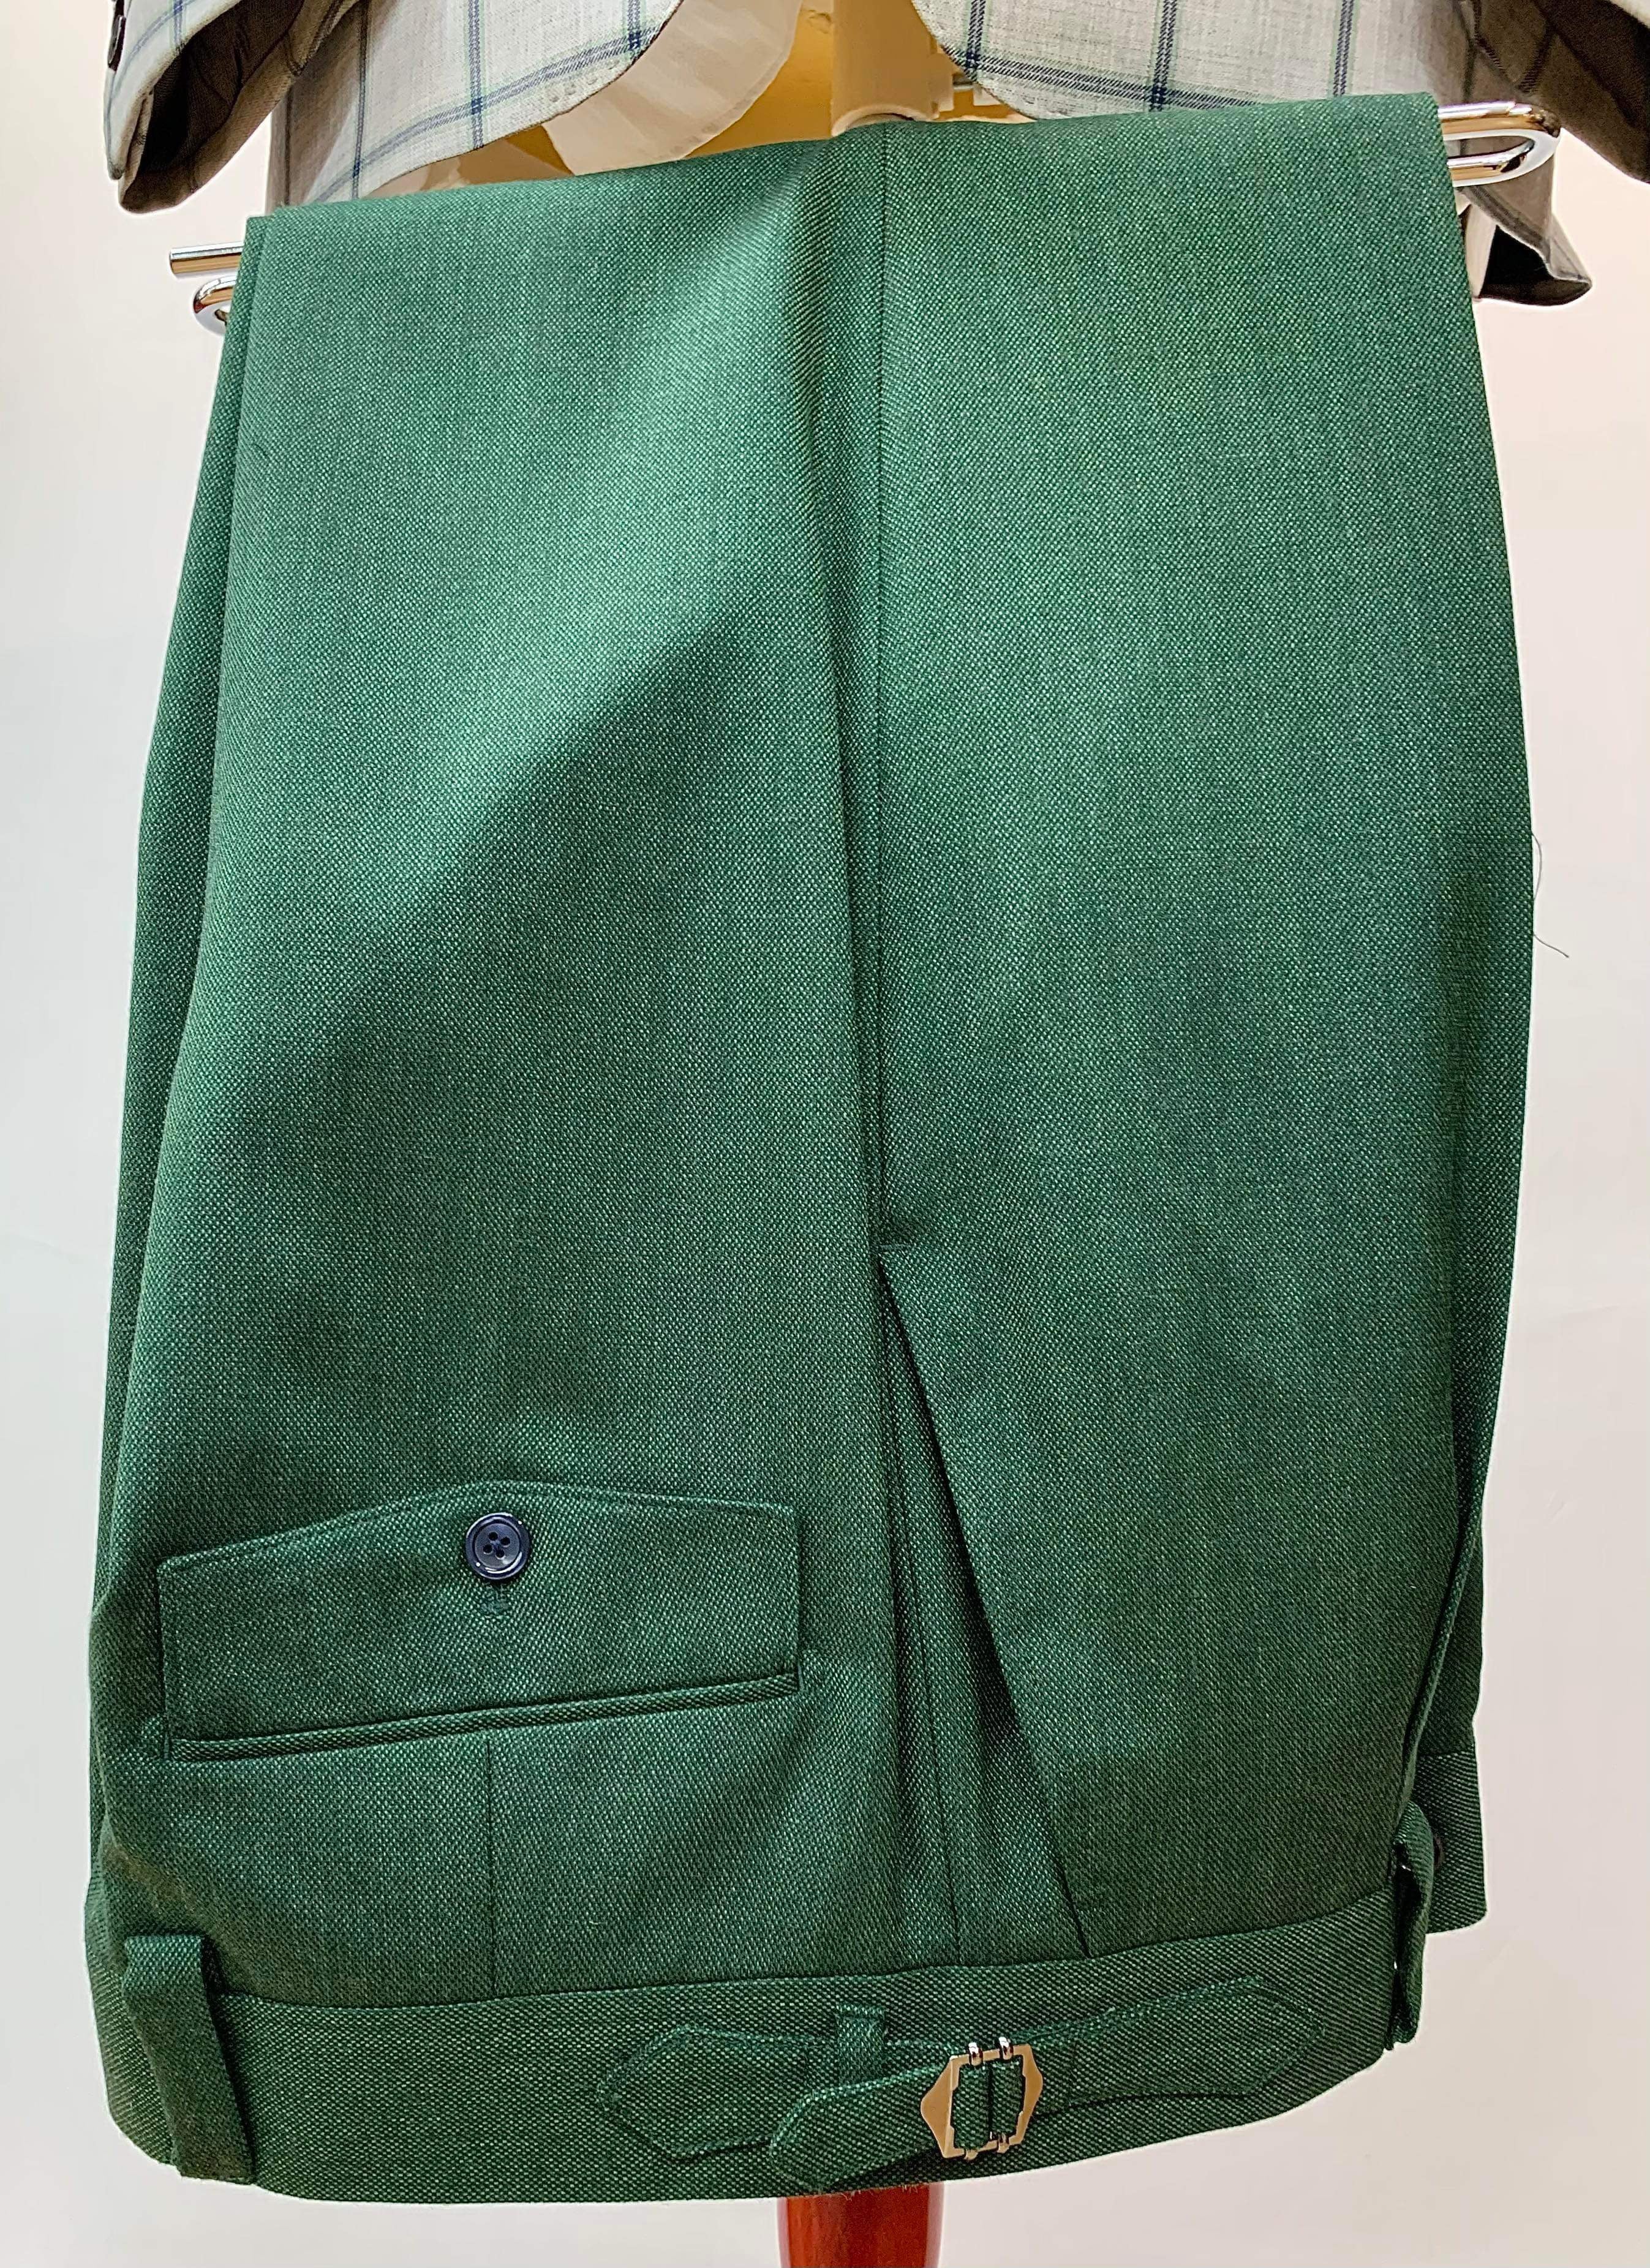 Tiglio Gray/Green & Blue Windowpane w/Green Pant